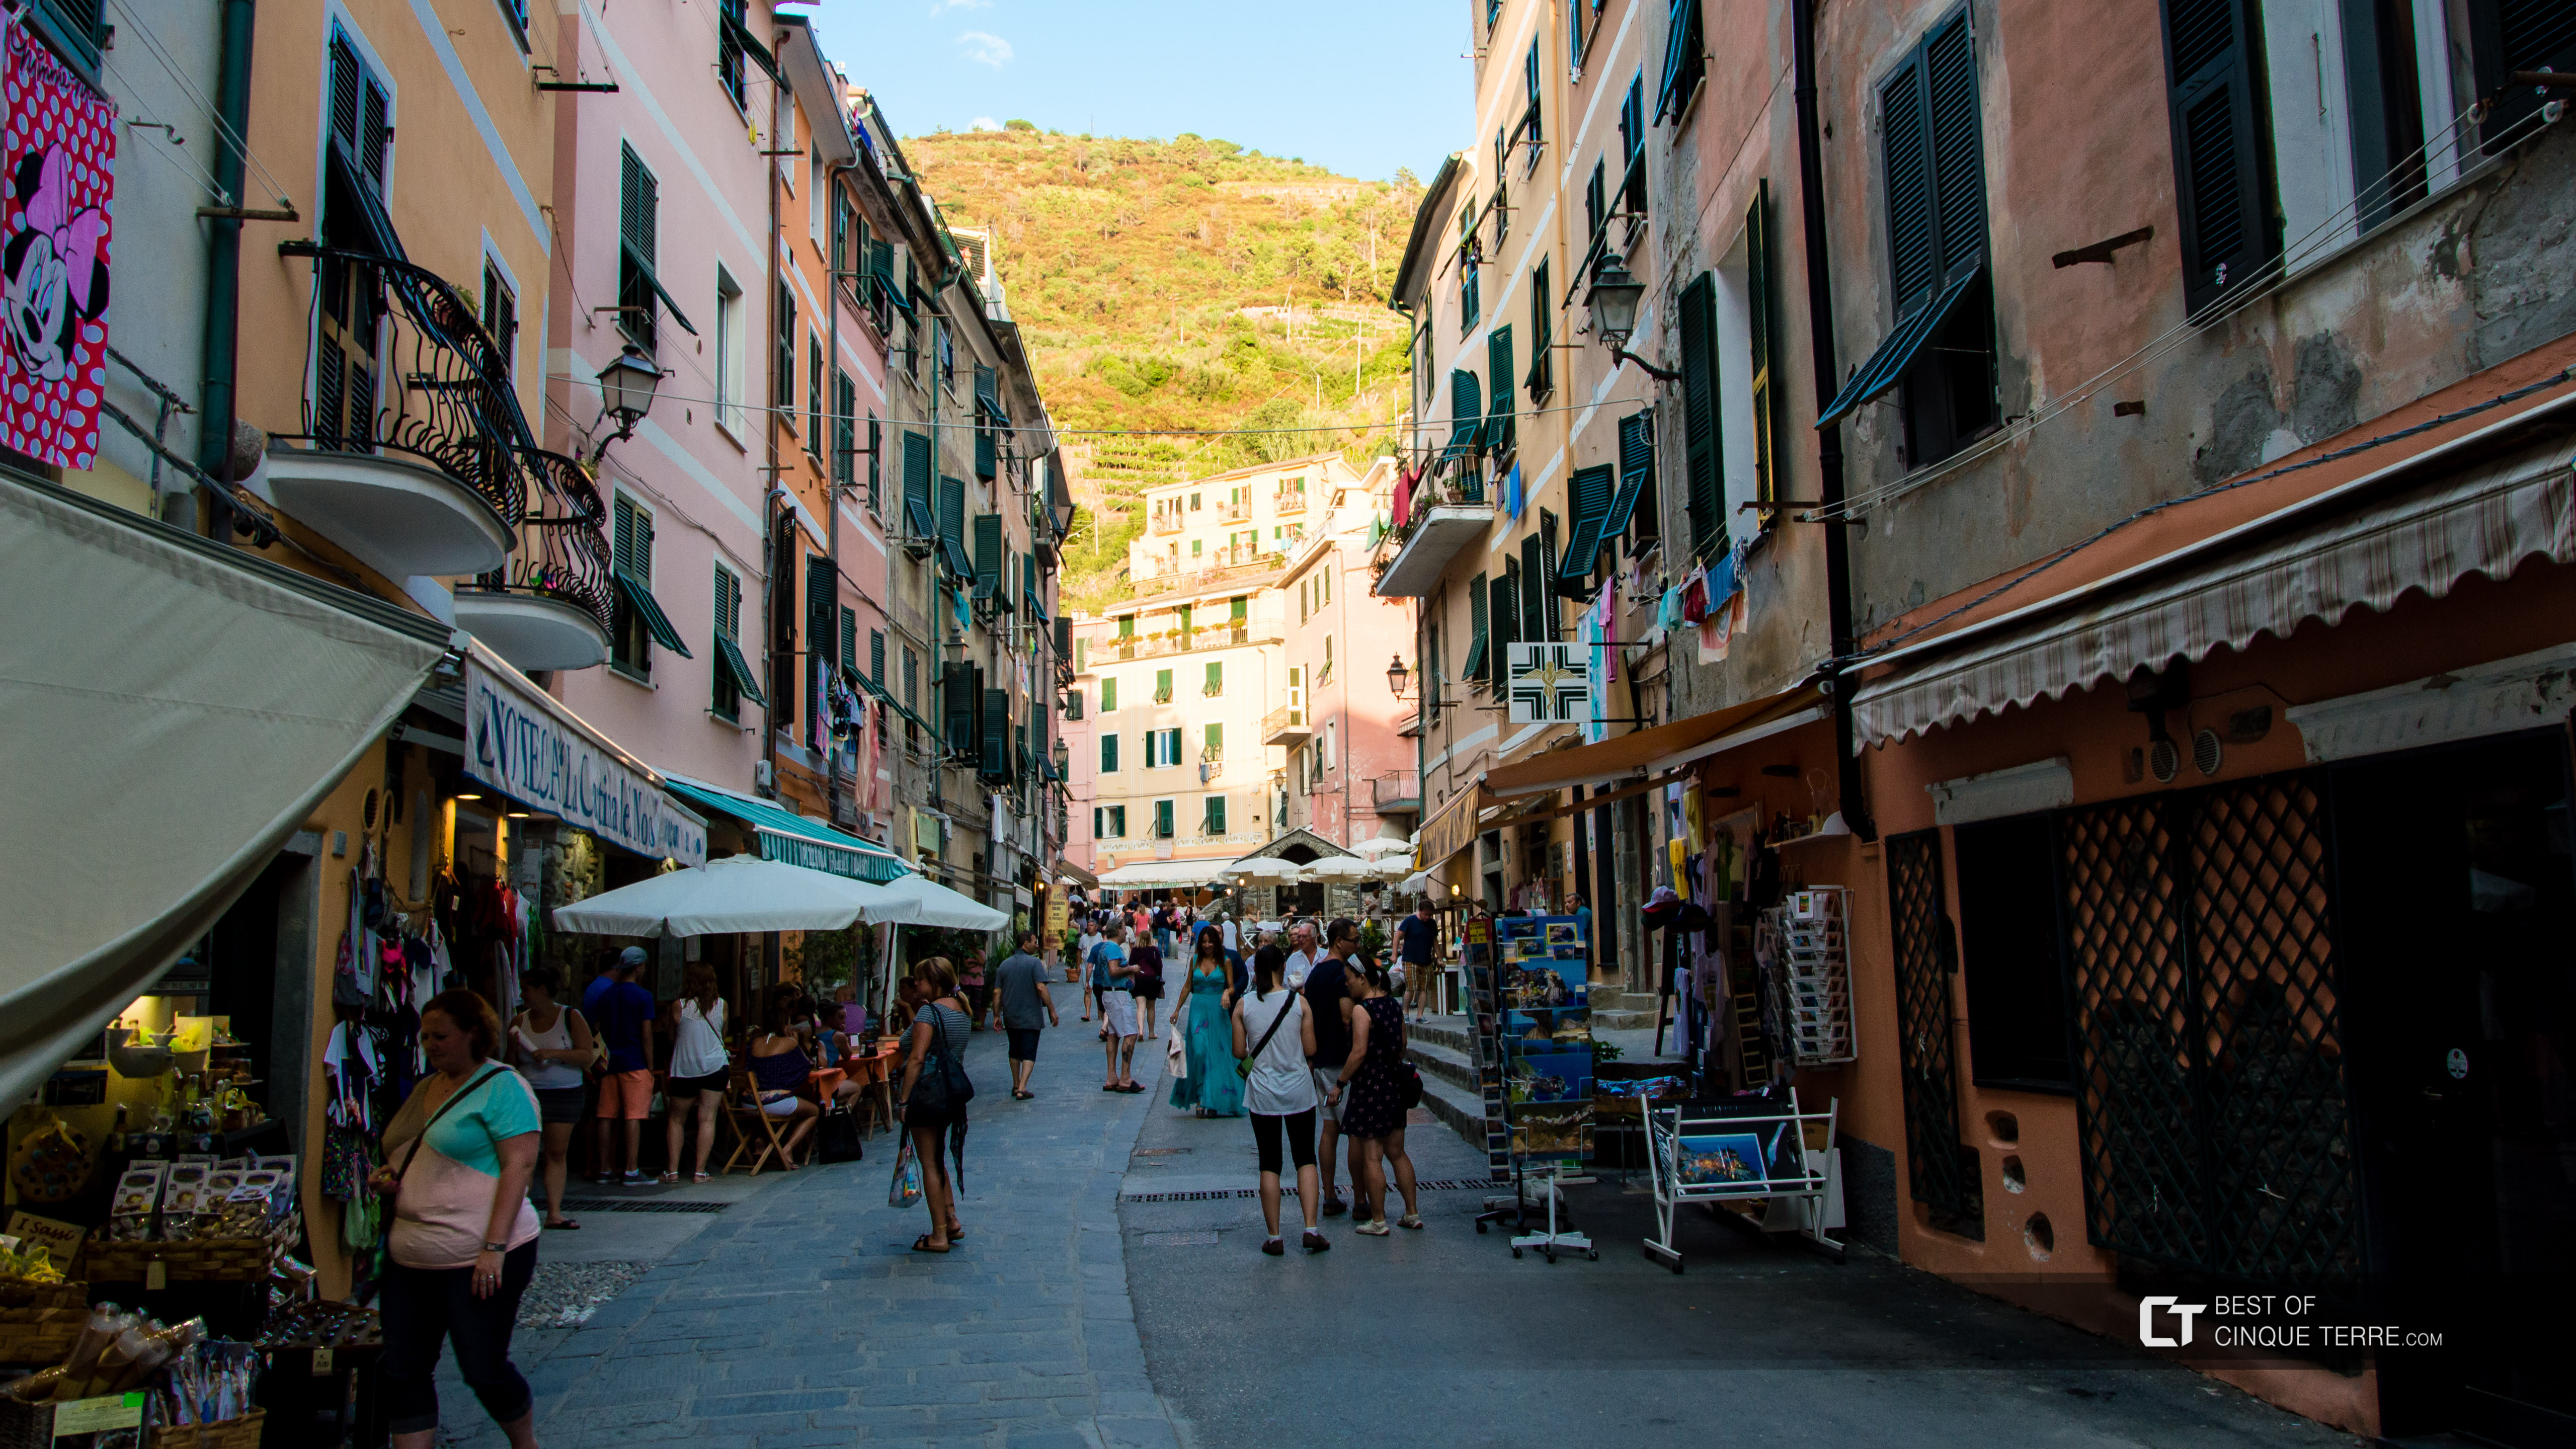 The main street, Vernazza, Cinque Terre, Italy